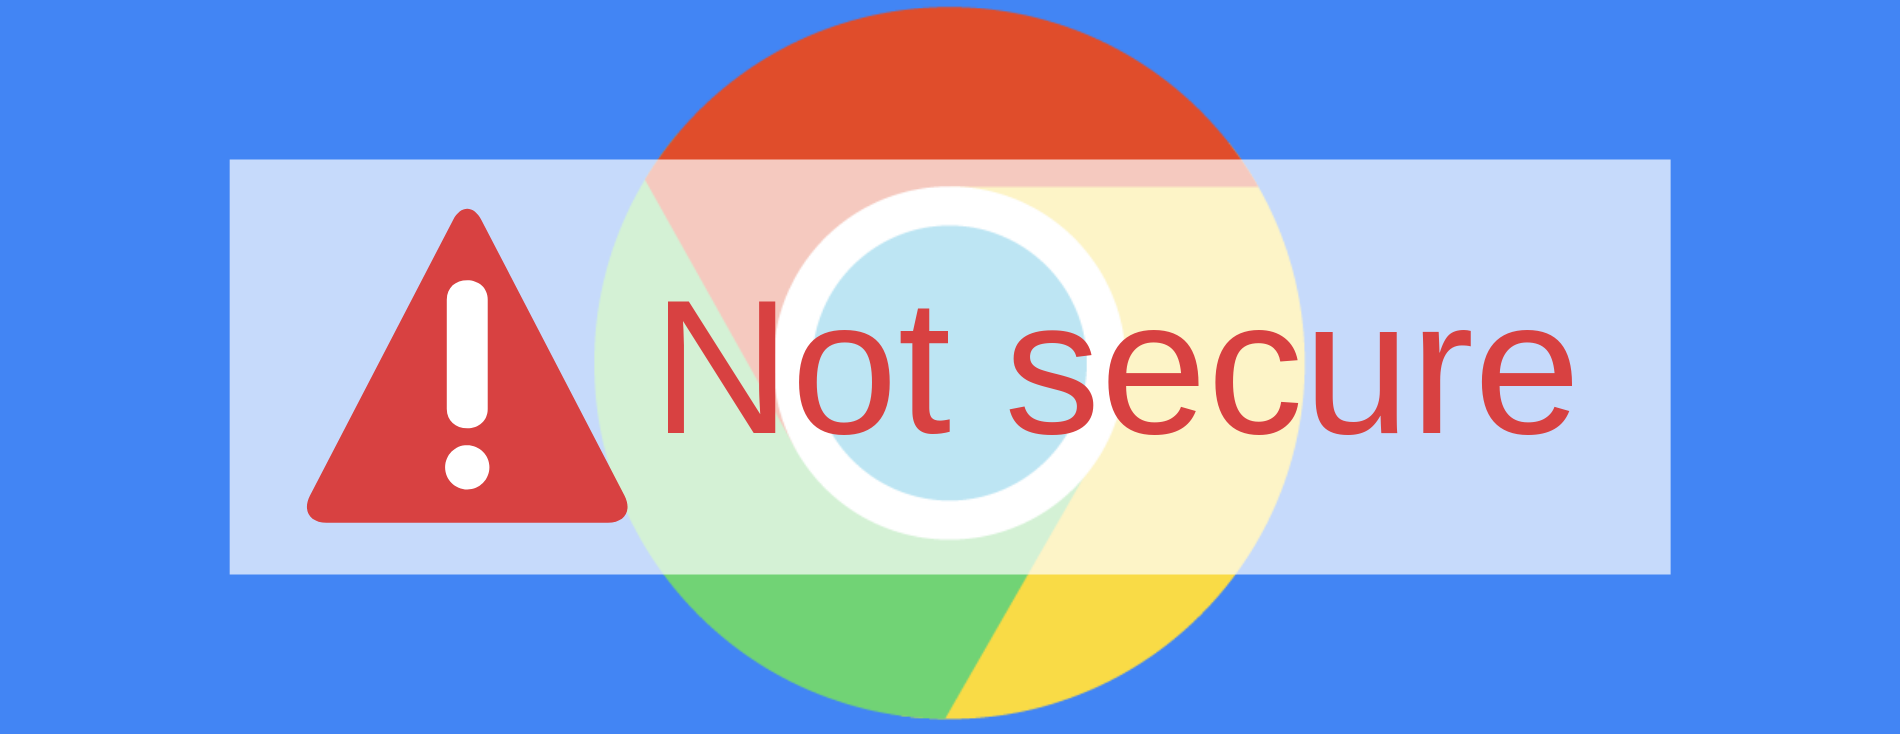 Google Chrome "Not Secure" Warning